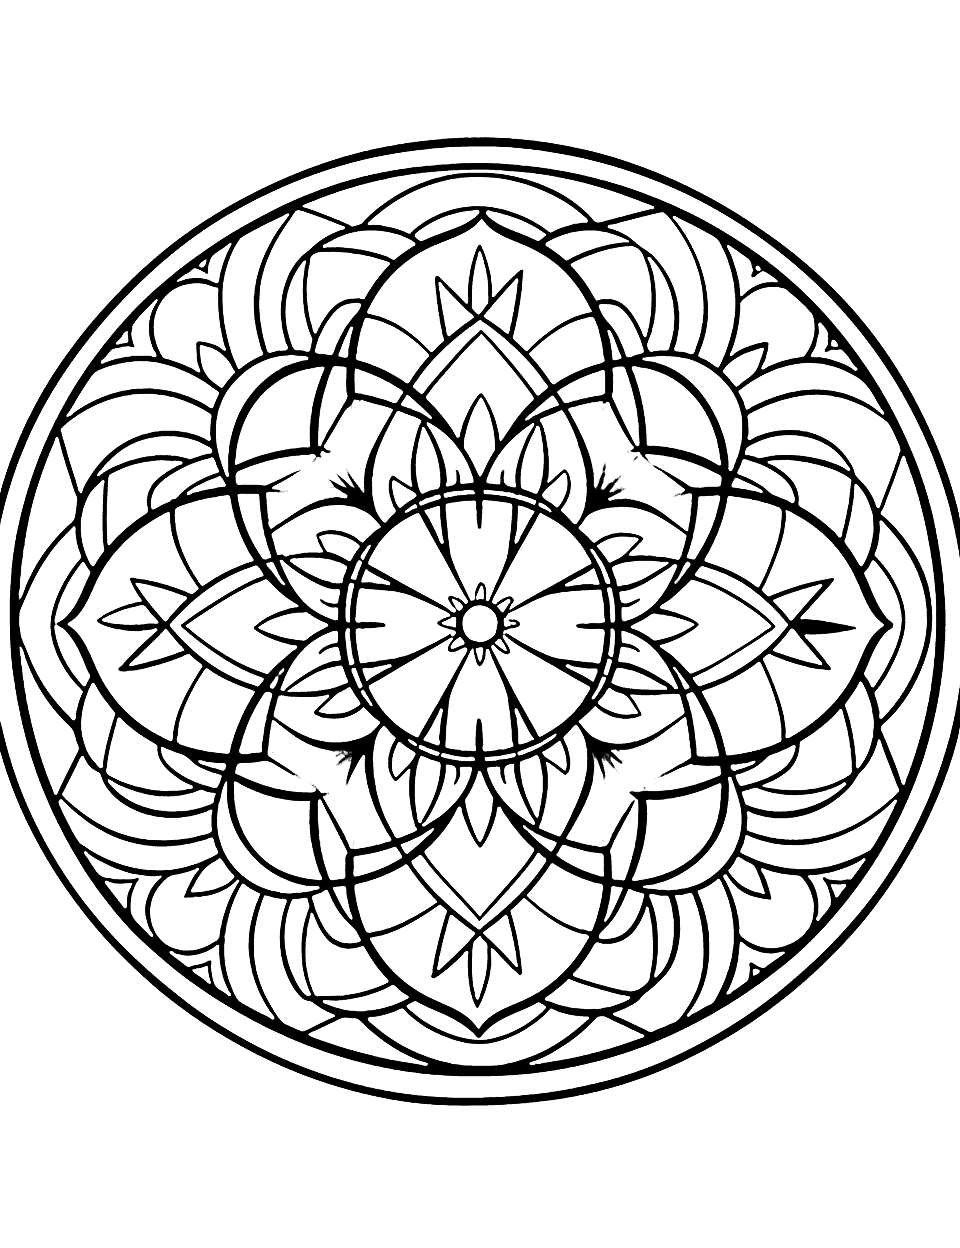 Geometric Jungle Mandala Coloring Page - An advanced, detailed mandala design filled with geometric shapes.